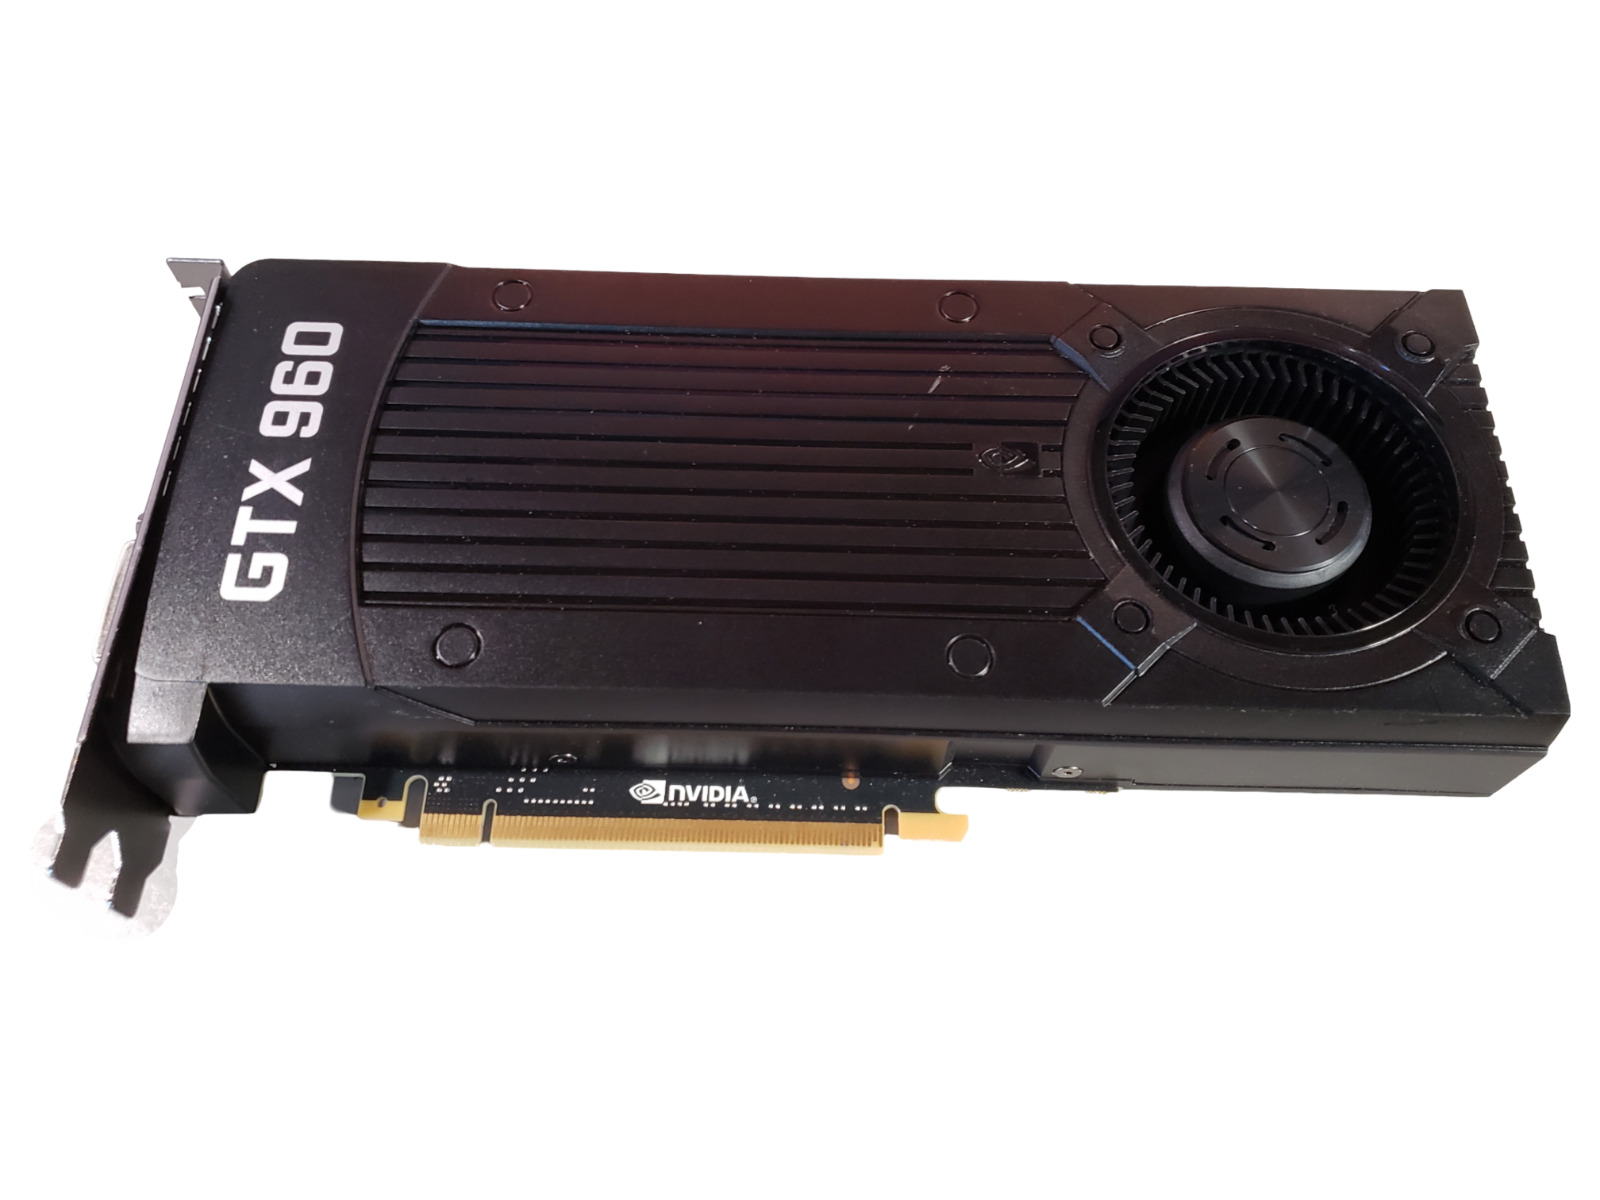 Nvidia Geforce GTX 960 2GB GDDR5 Video Card PG301